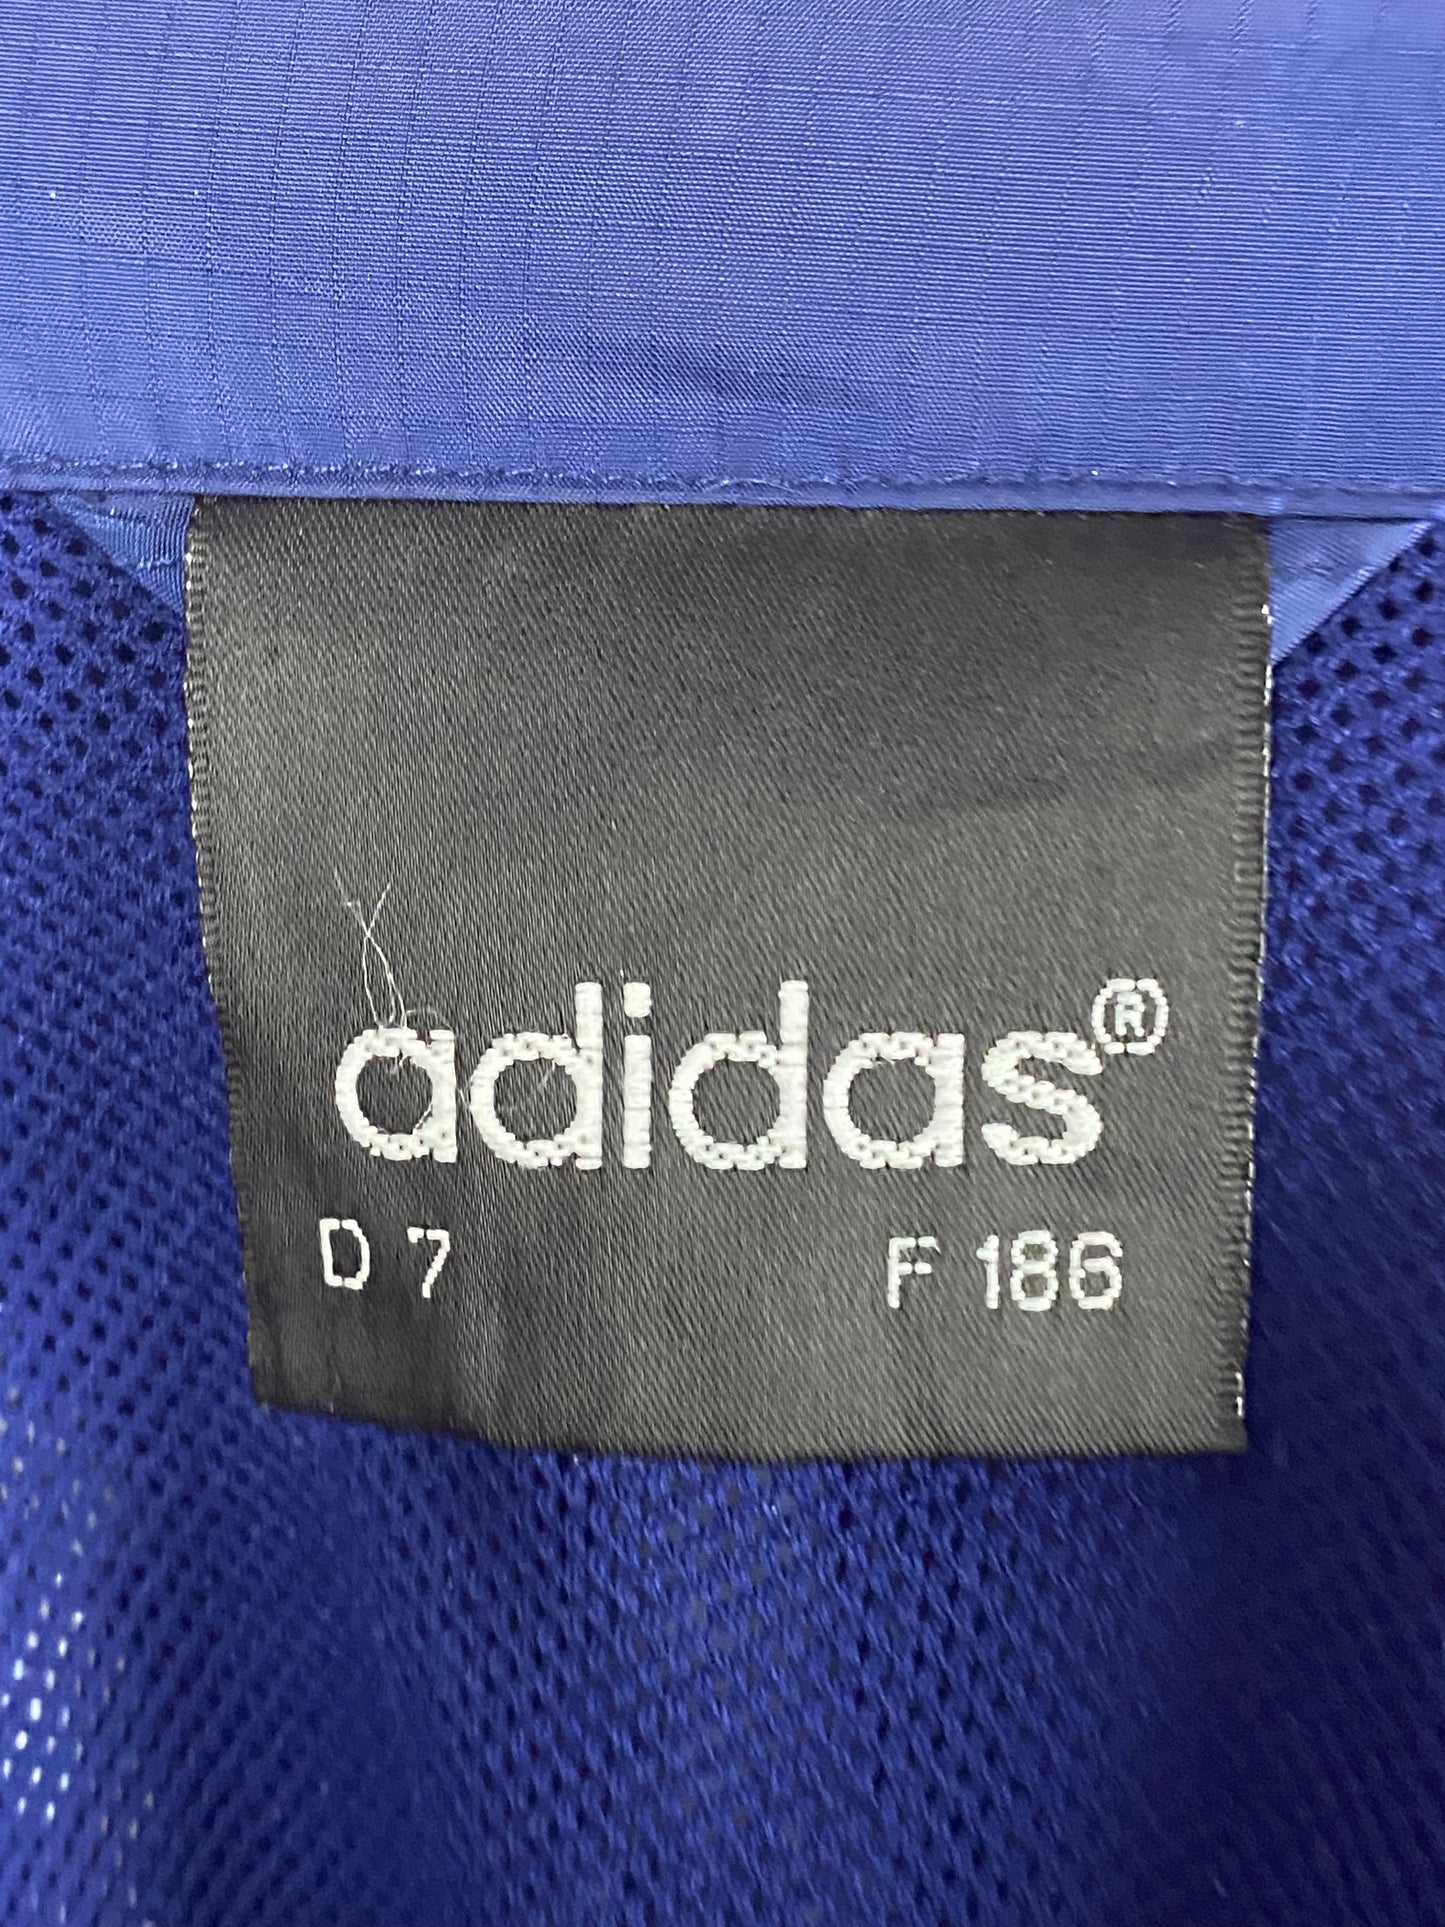 90s Adidas Vintage Men's Windbreaker Jacket - Large Navy Blue Nylon